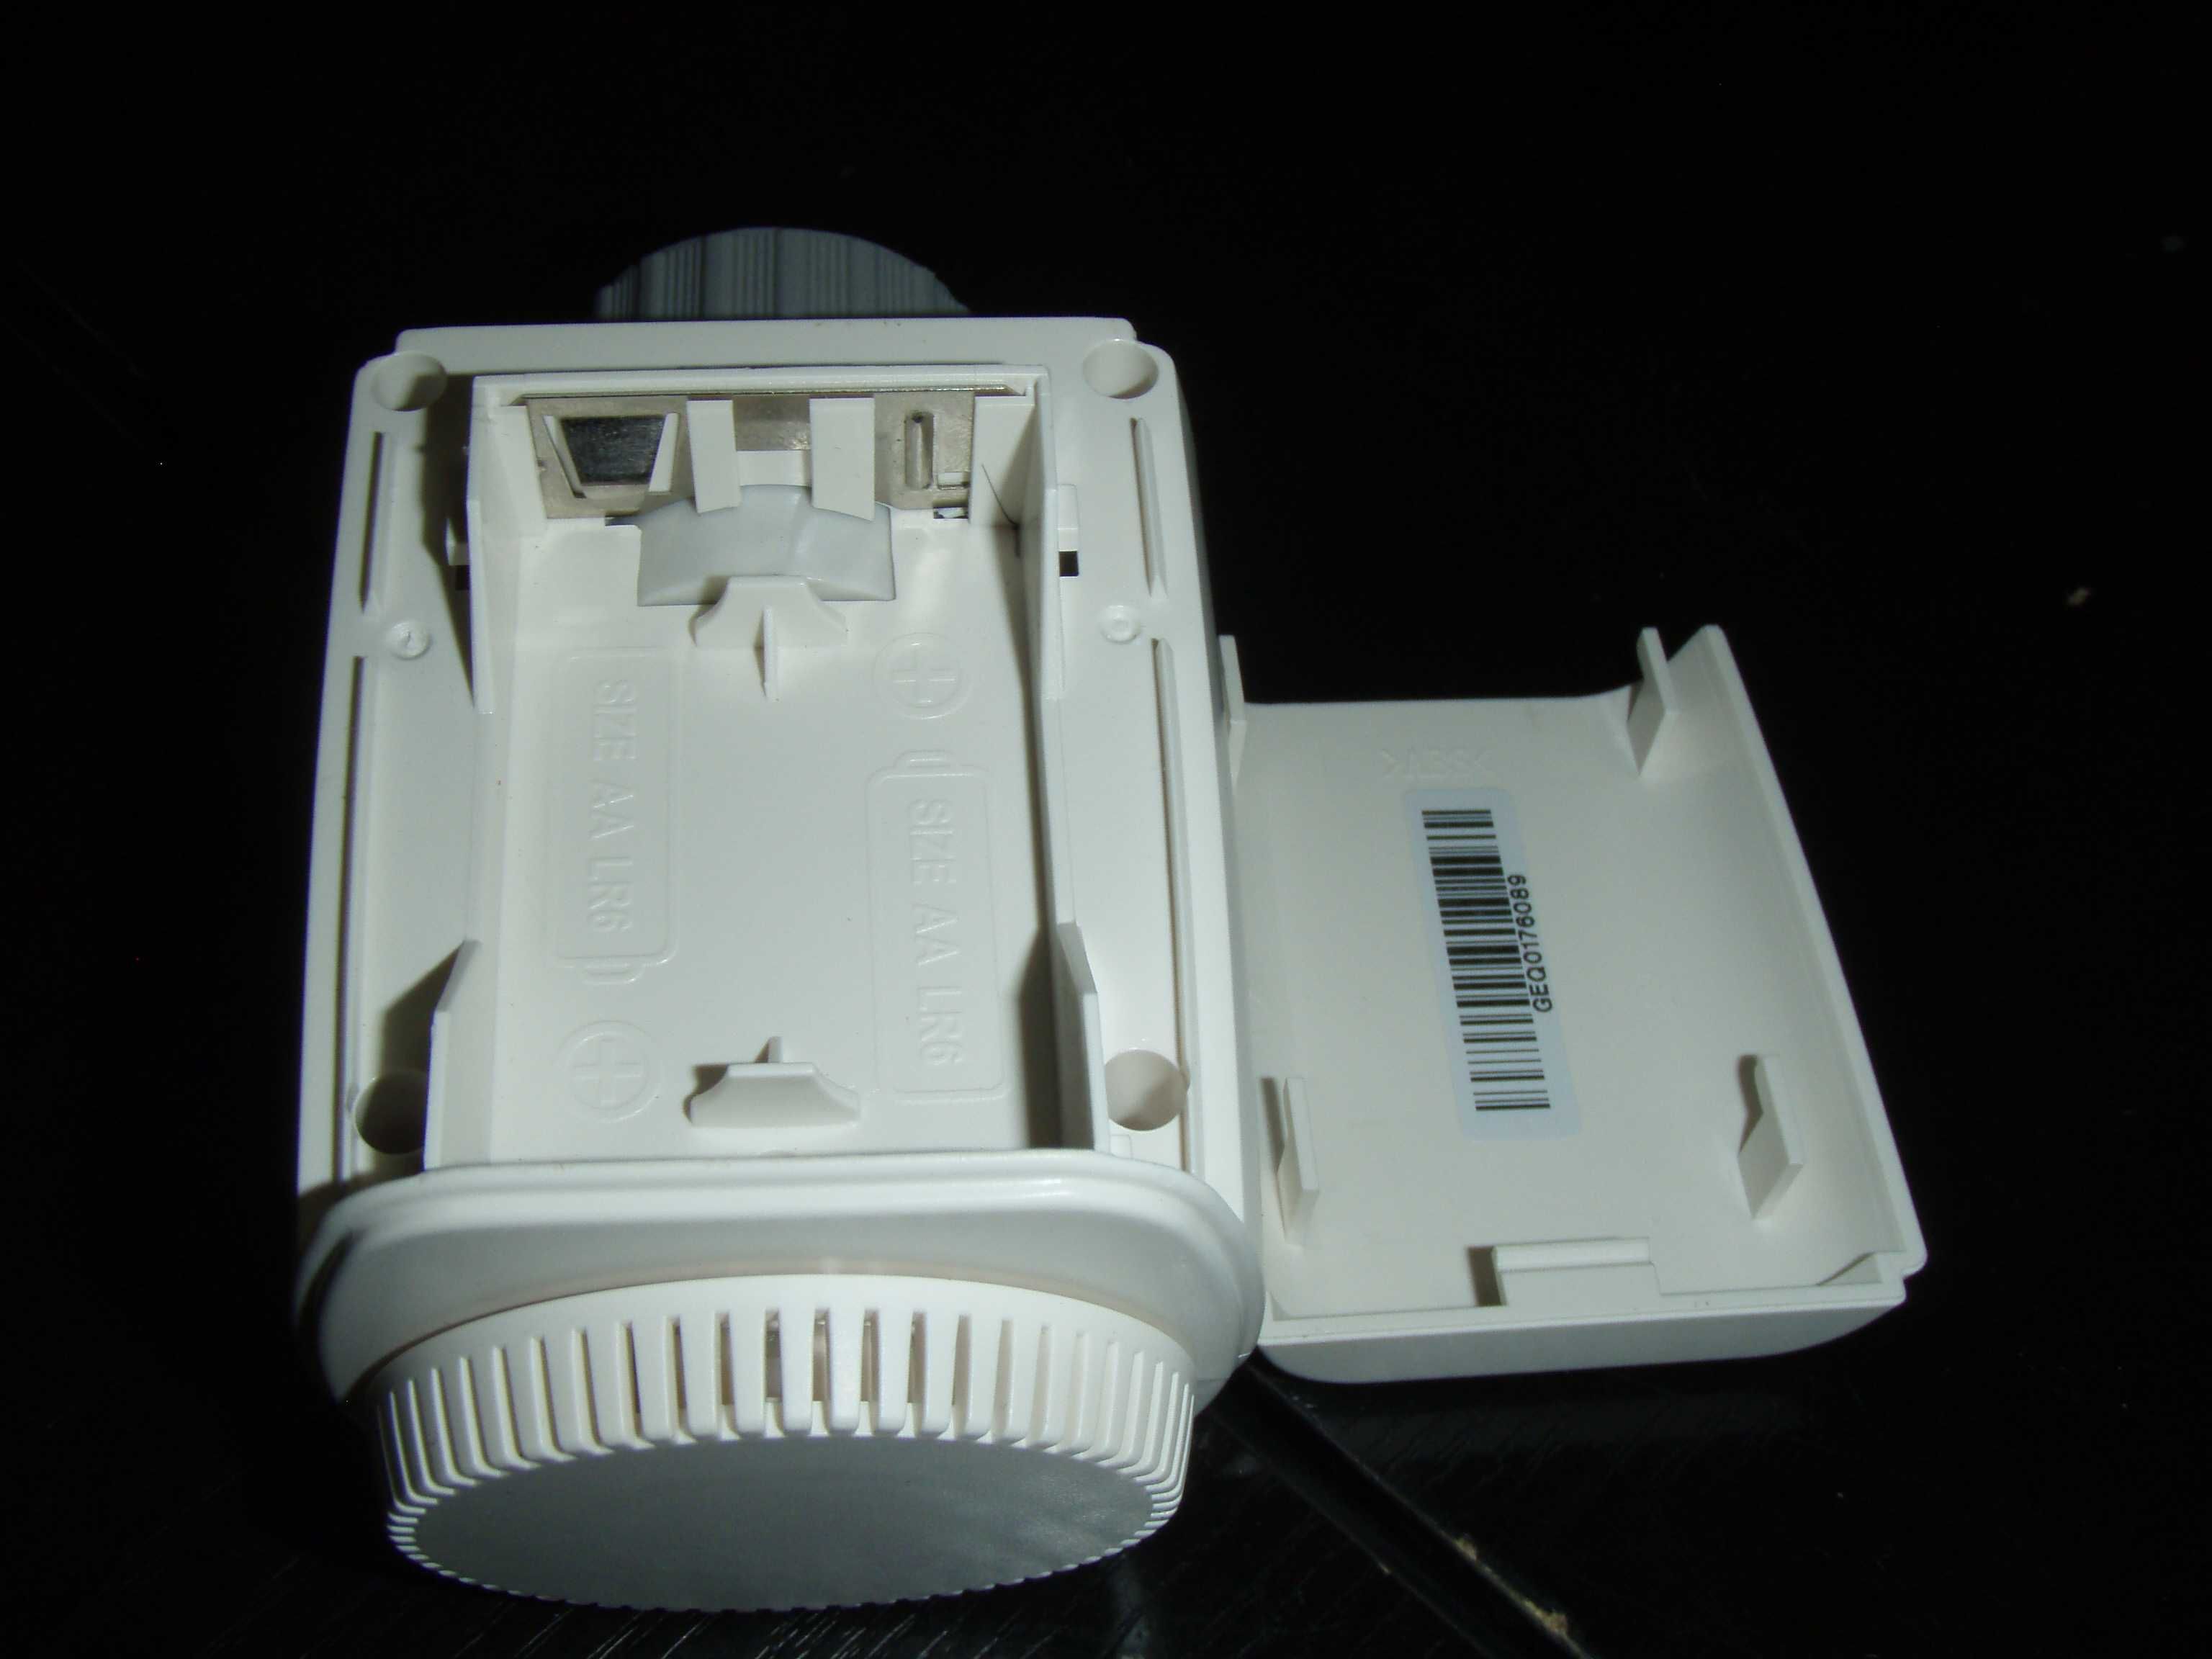 Cap termostatat digital wireless eQ-3 MAX! CC-RT-RX-CyG-W-R5, nou